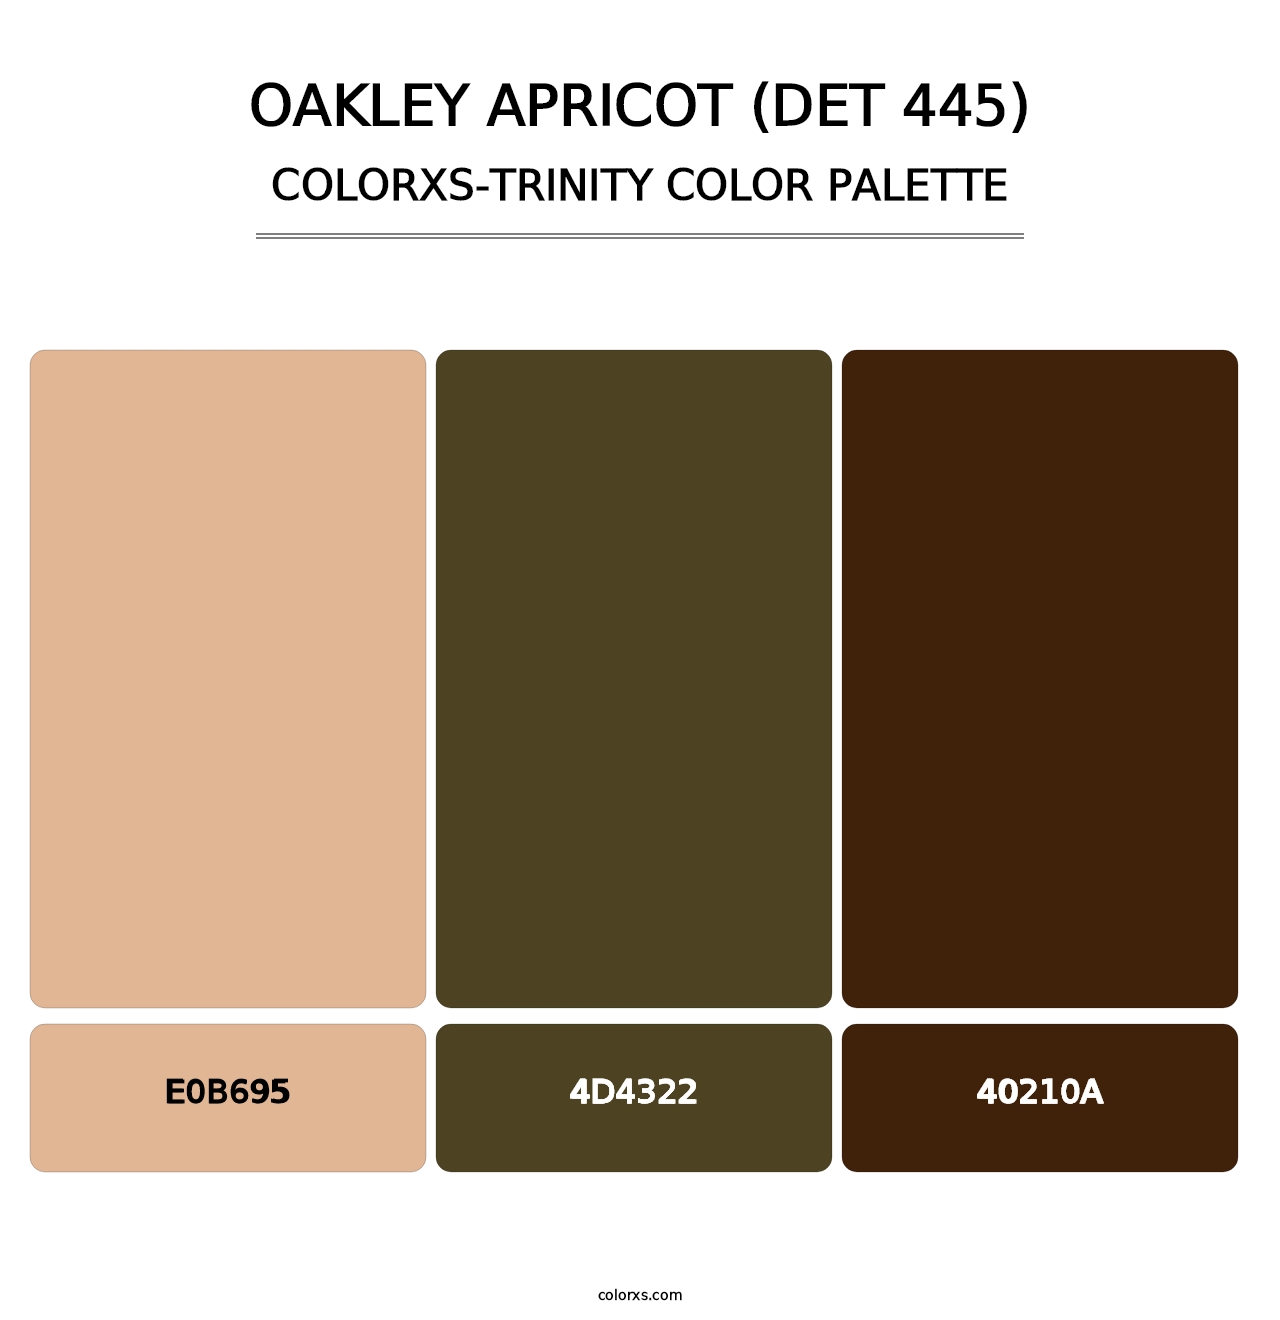 Oakley Apricot (DET 445) - Colorxs Trinity Palette